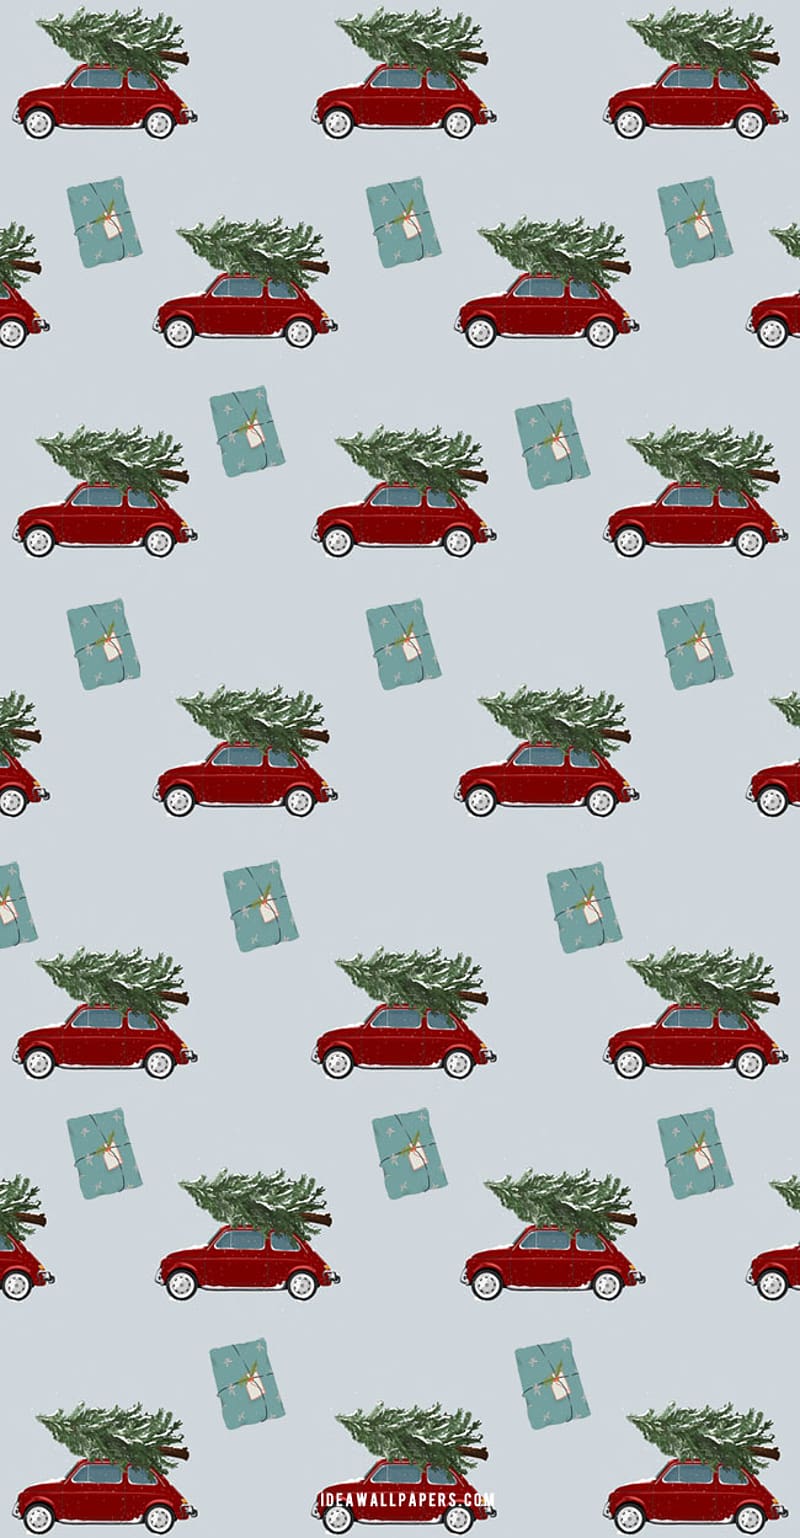 https://w0.peakpx.com/wallpaper/688/159/HD-wallpaper-cute-christmas-ideas-for-phones-car-gift-idea-iphone-color-schemes-preppy-christmas.jpg